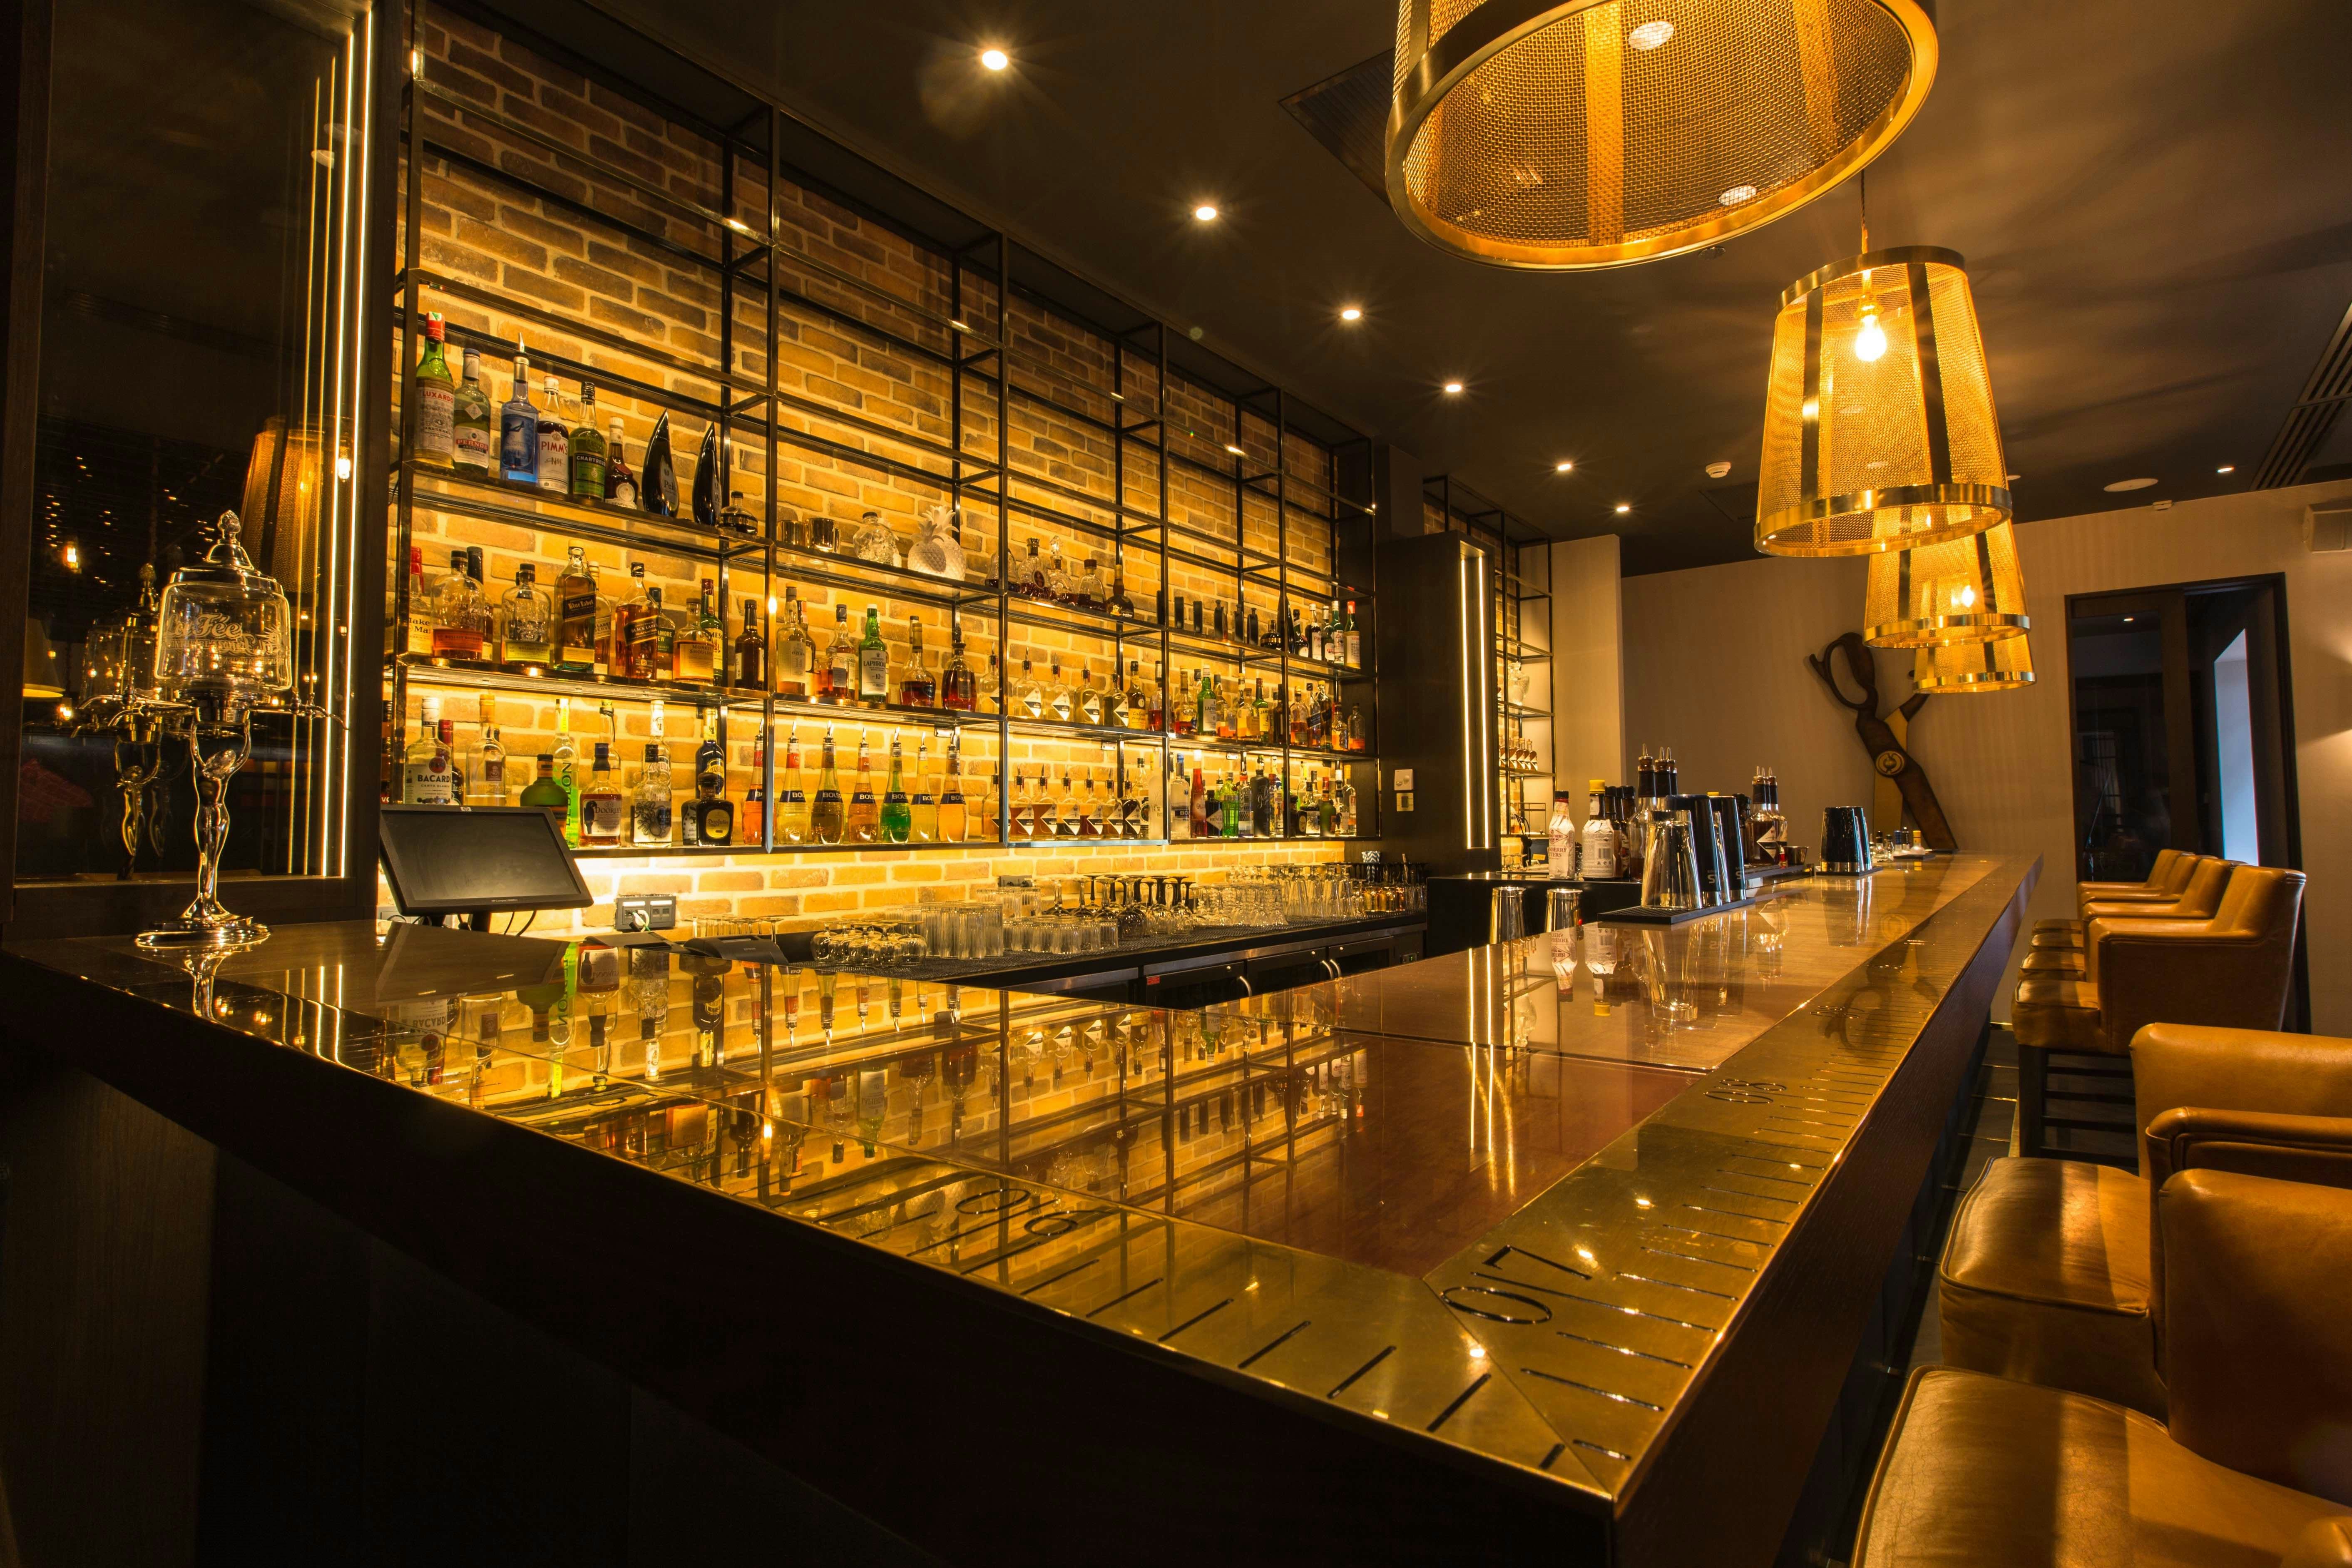 Best Hotel Bar Award: The Tailor beste hotelbar van Amsterdam